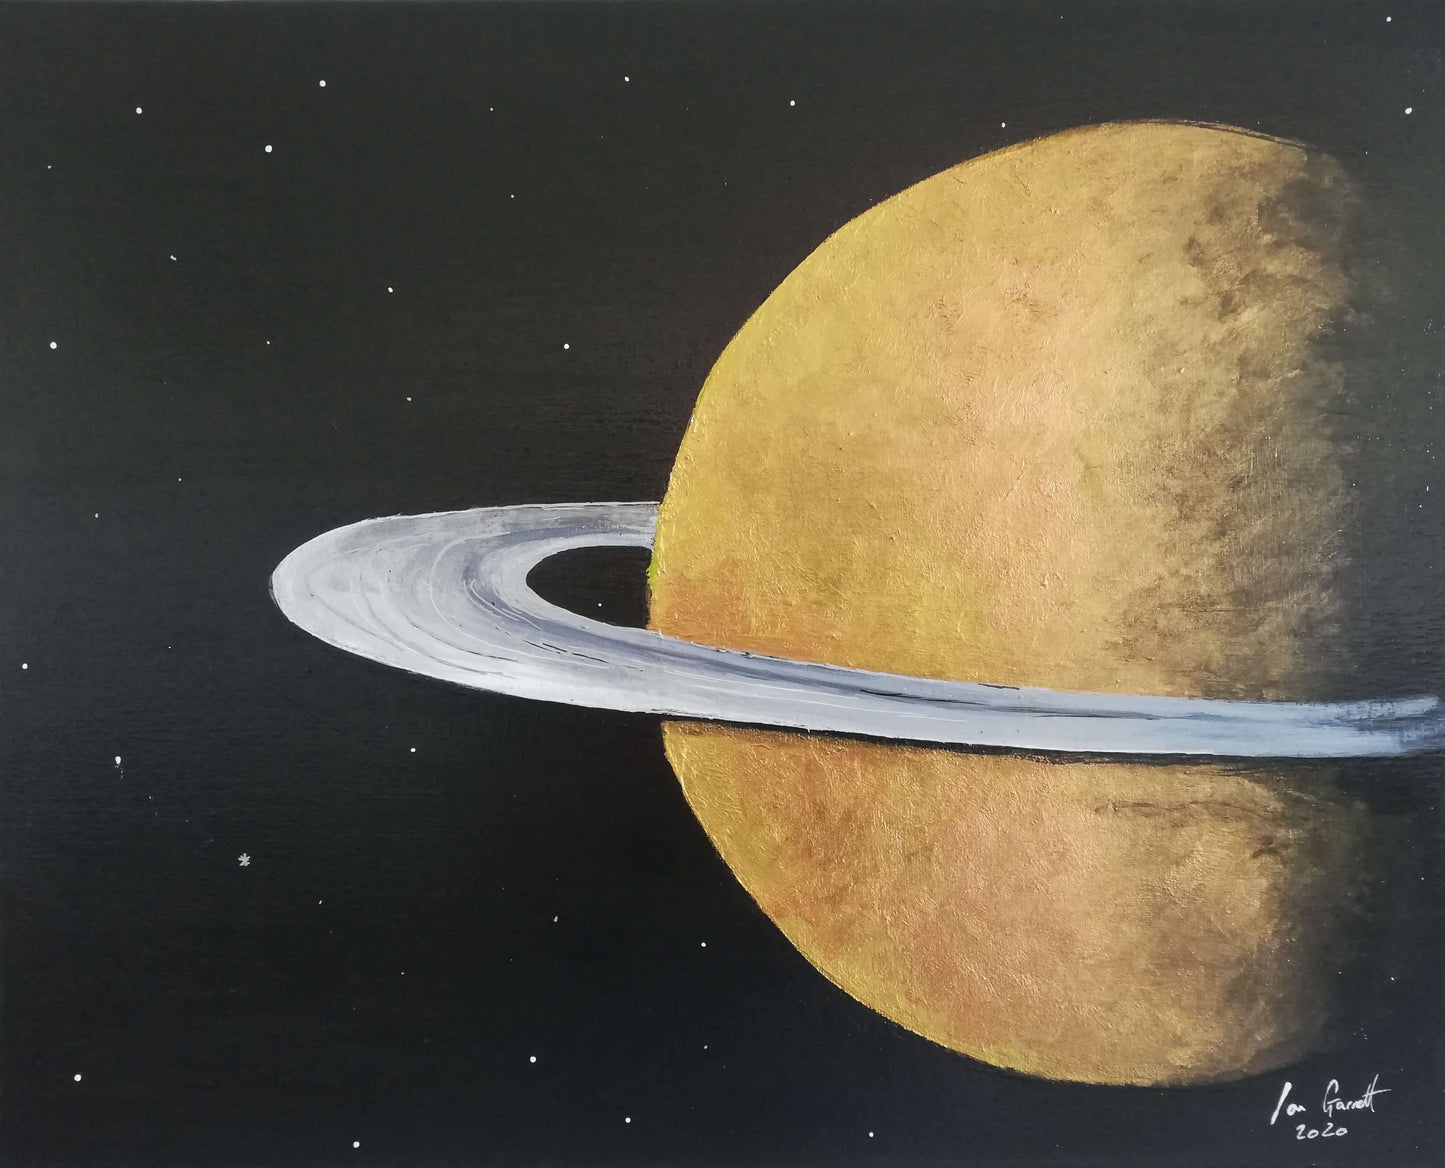 Rings of Saturn, ©Ian Garrett 2020. Acrylic on Canvas 20 x 16 inches.